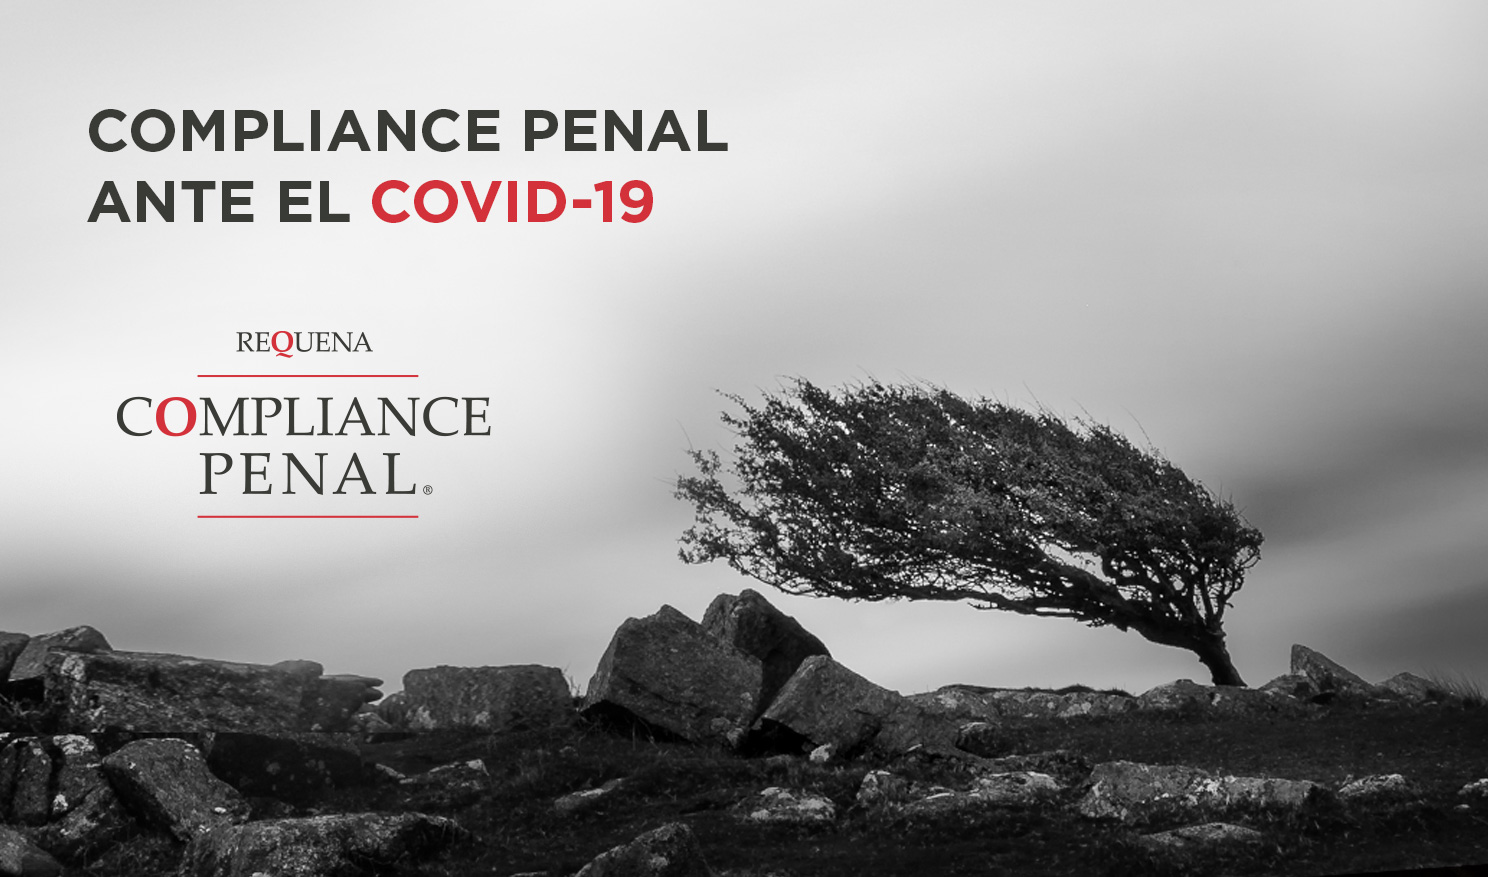 Compliance Penal ante el COVID-19